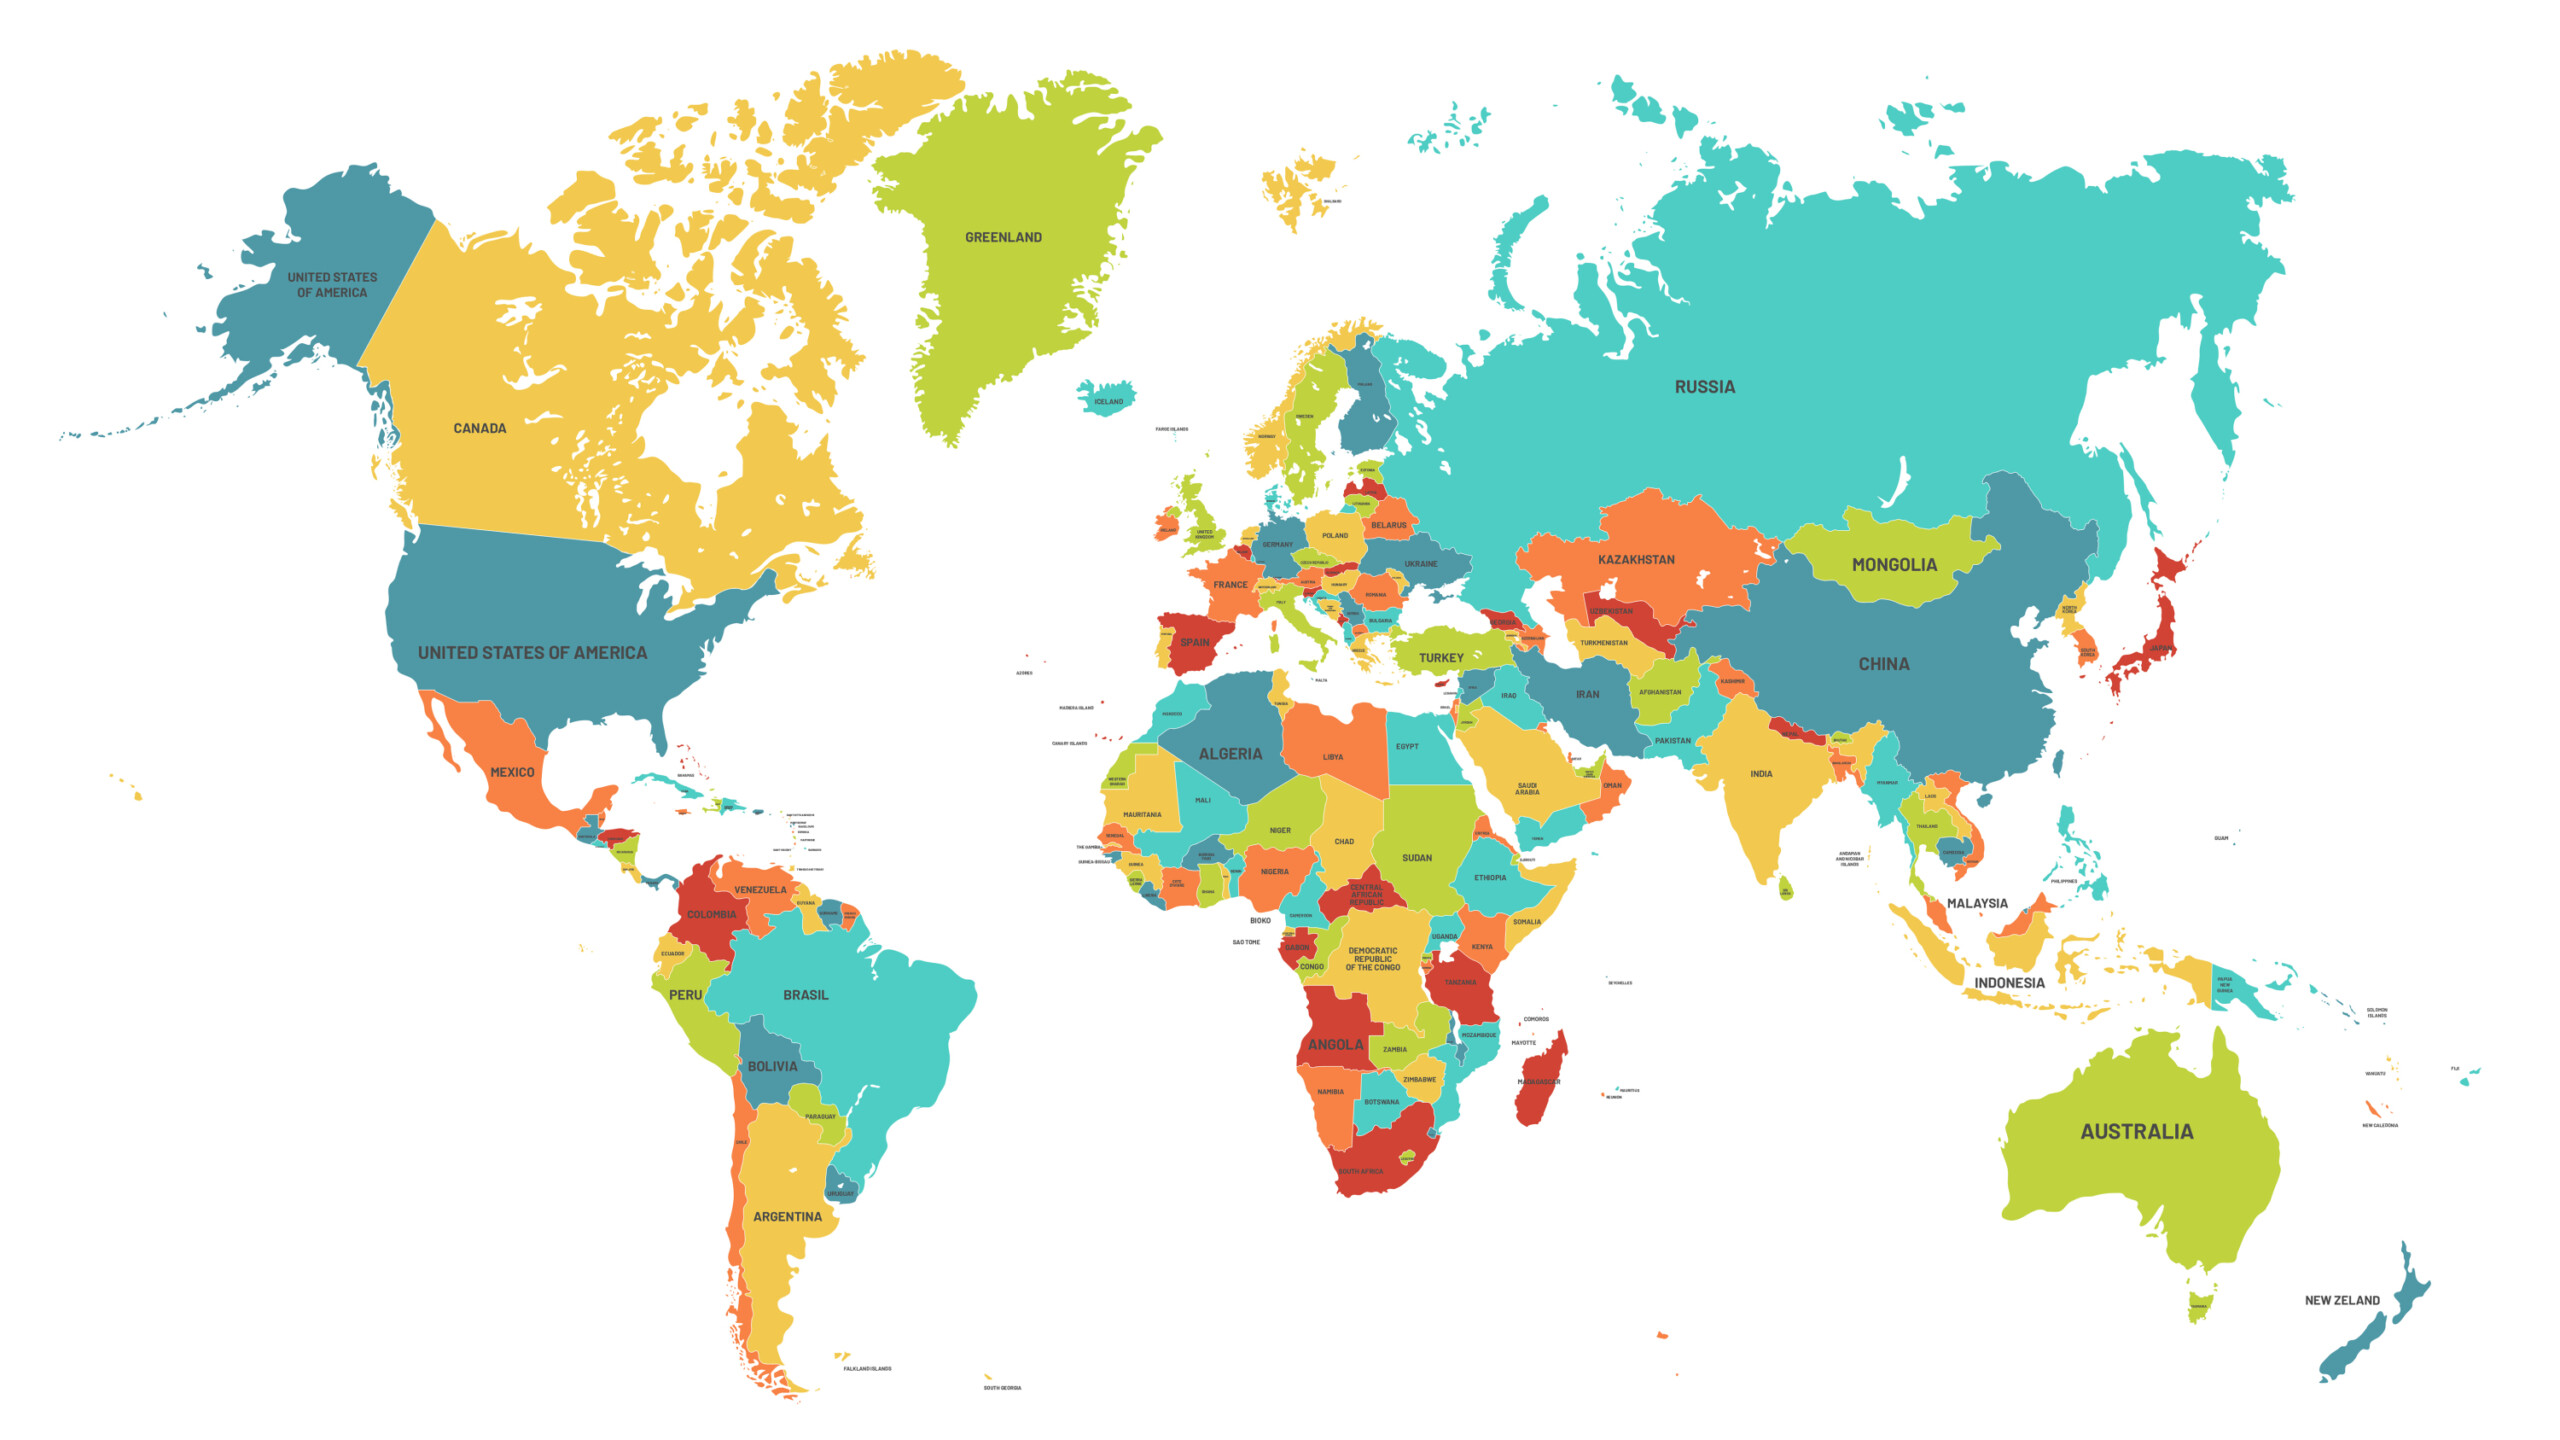 Colored World Map - Original image